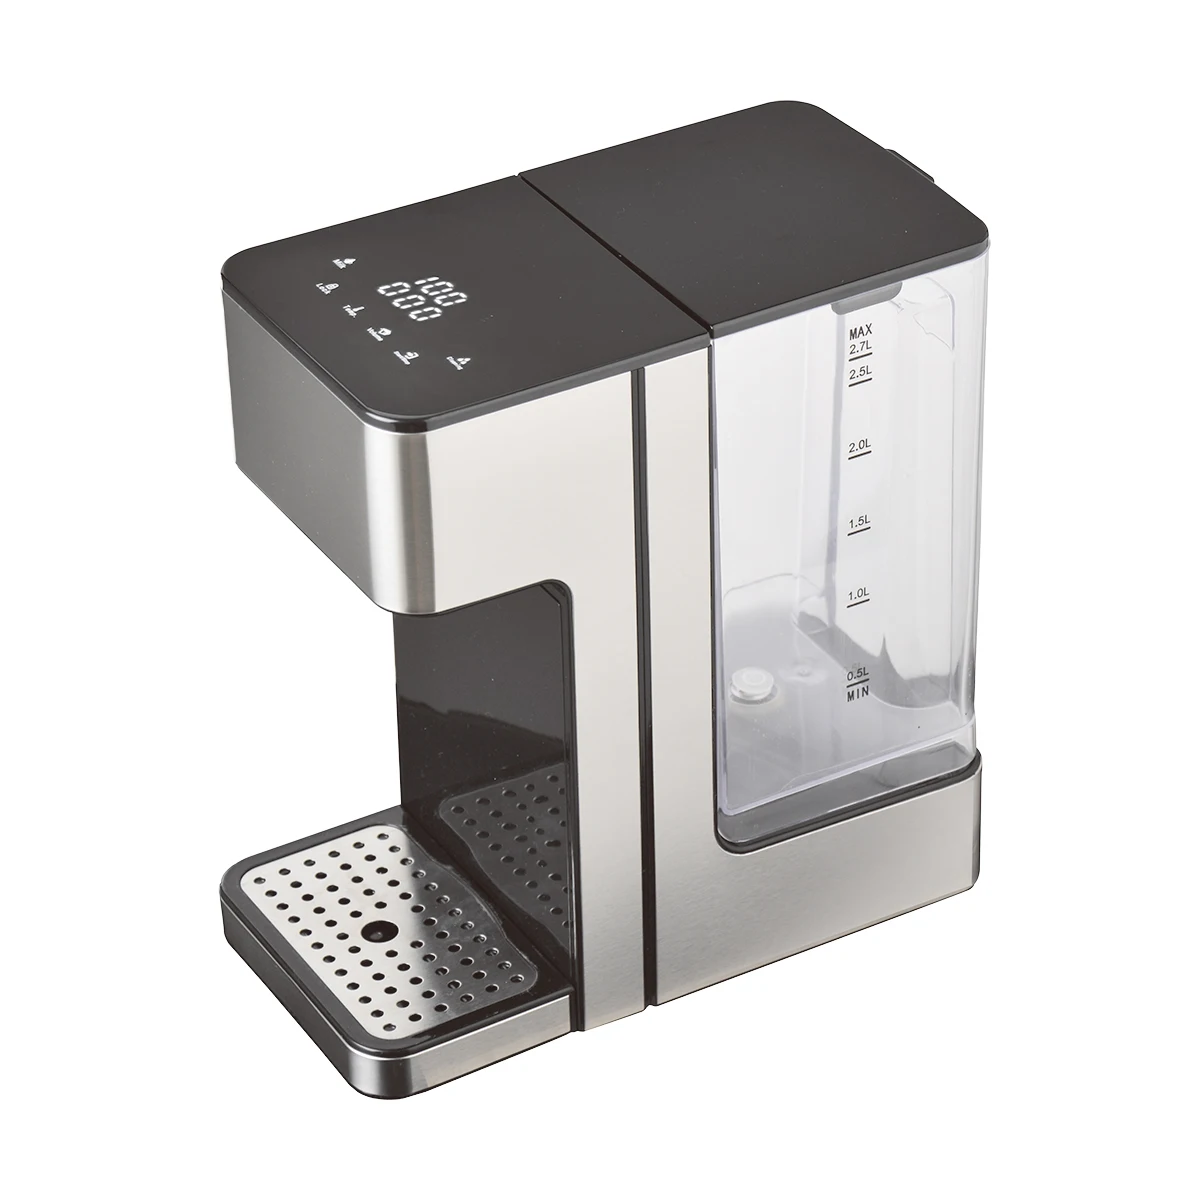 https://ae01.alicdn.com/kf/S30c648a37615490fa57101533dc67288t/2600W-Countertop-Style-Boiling-Water-Dispenser-Desktop-Smart-Instant-Hot-Water-Dispenser-Machine.jpg